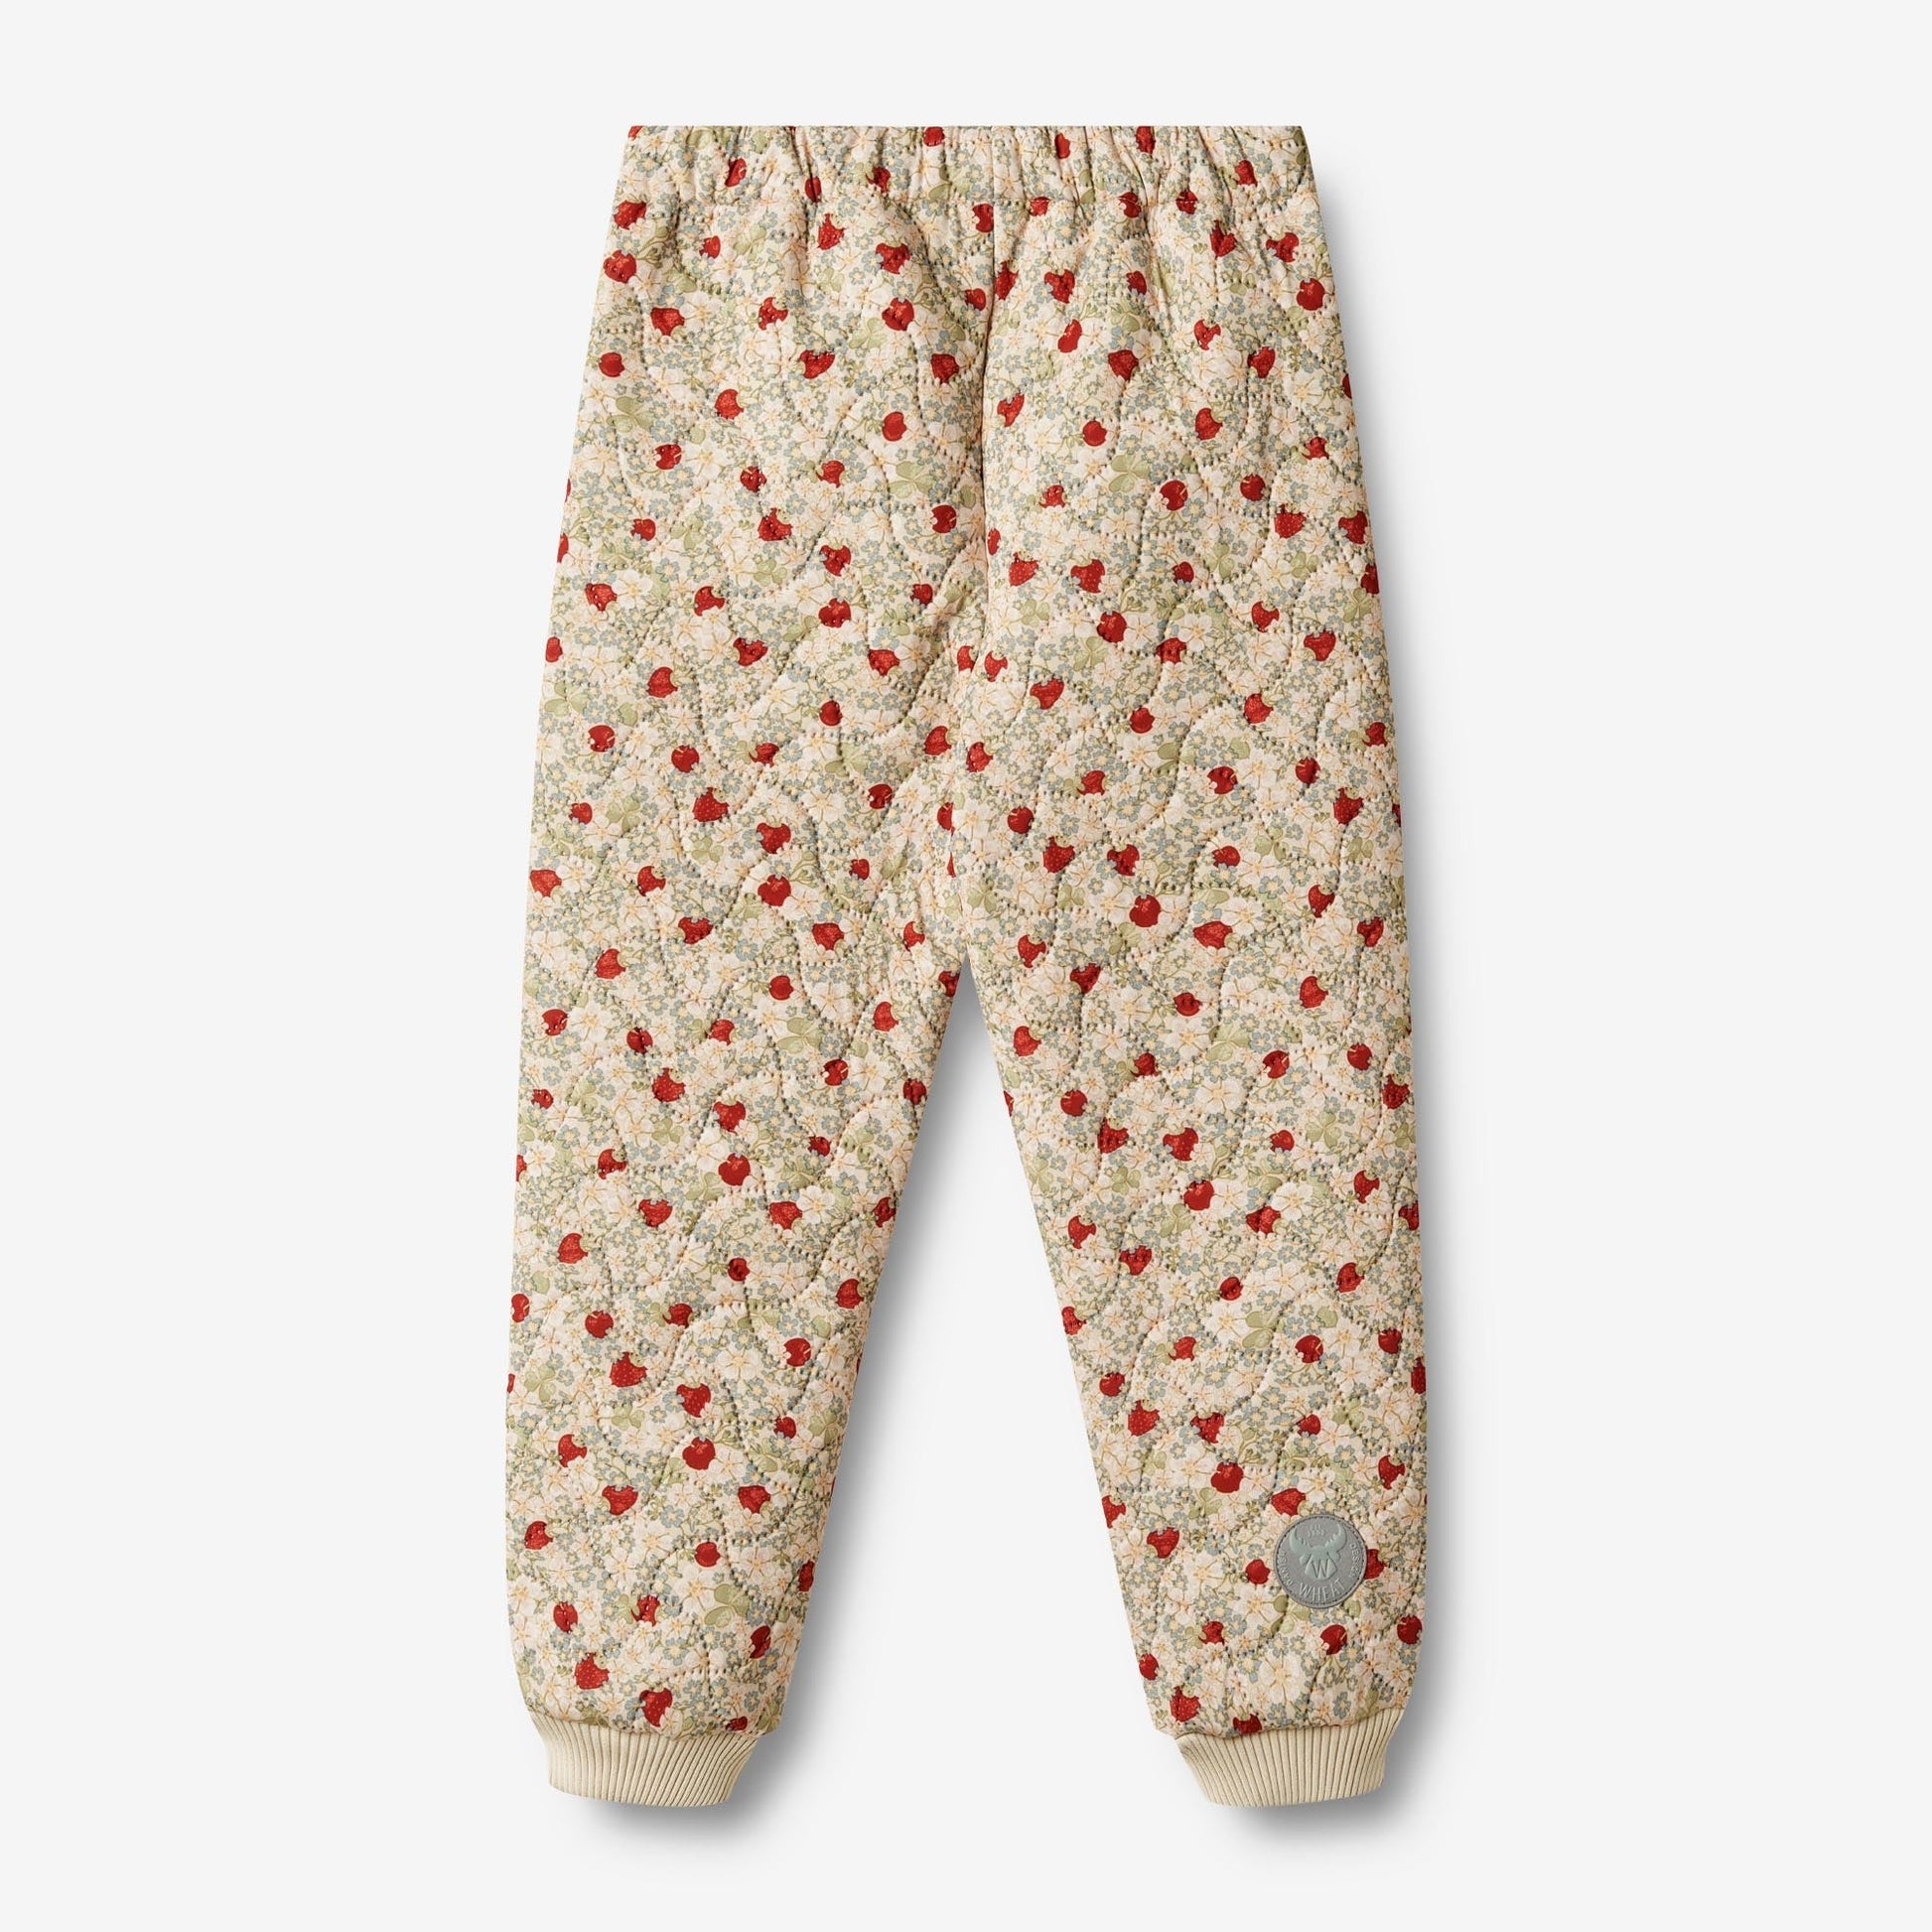 Wheat 'Alex' Children's Thermo Pants - Strawberry